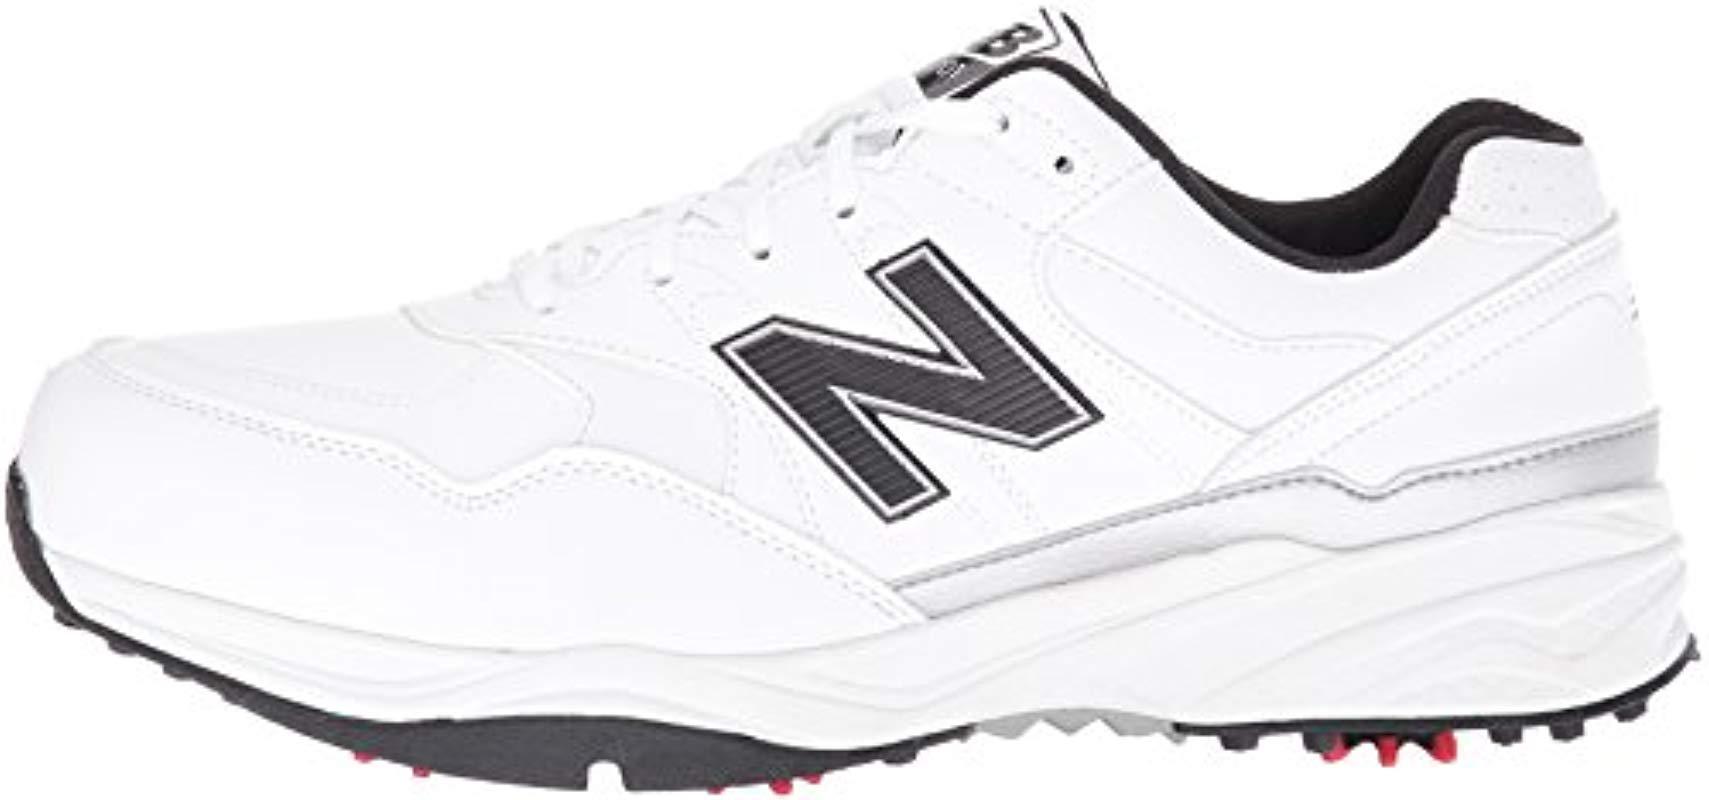 new balance nbg1701 spiked golf shoe